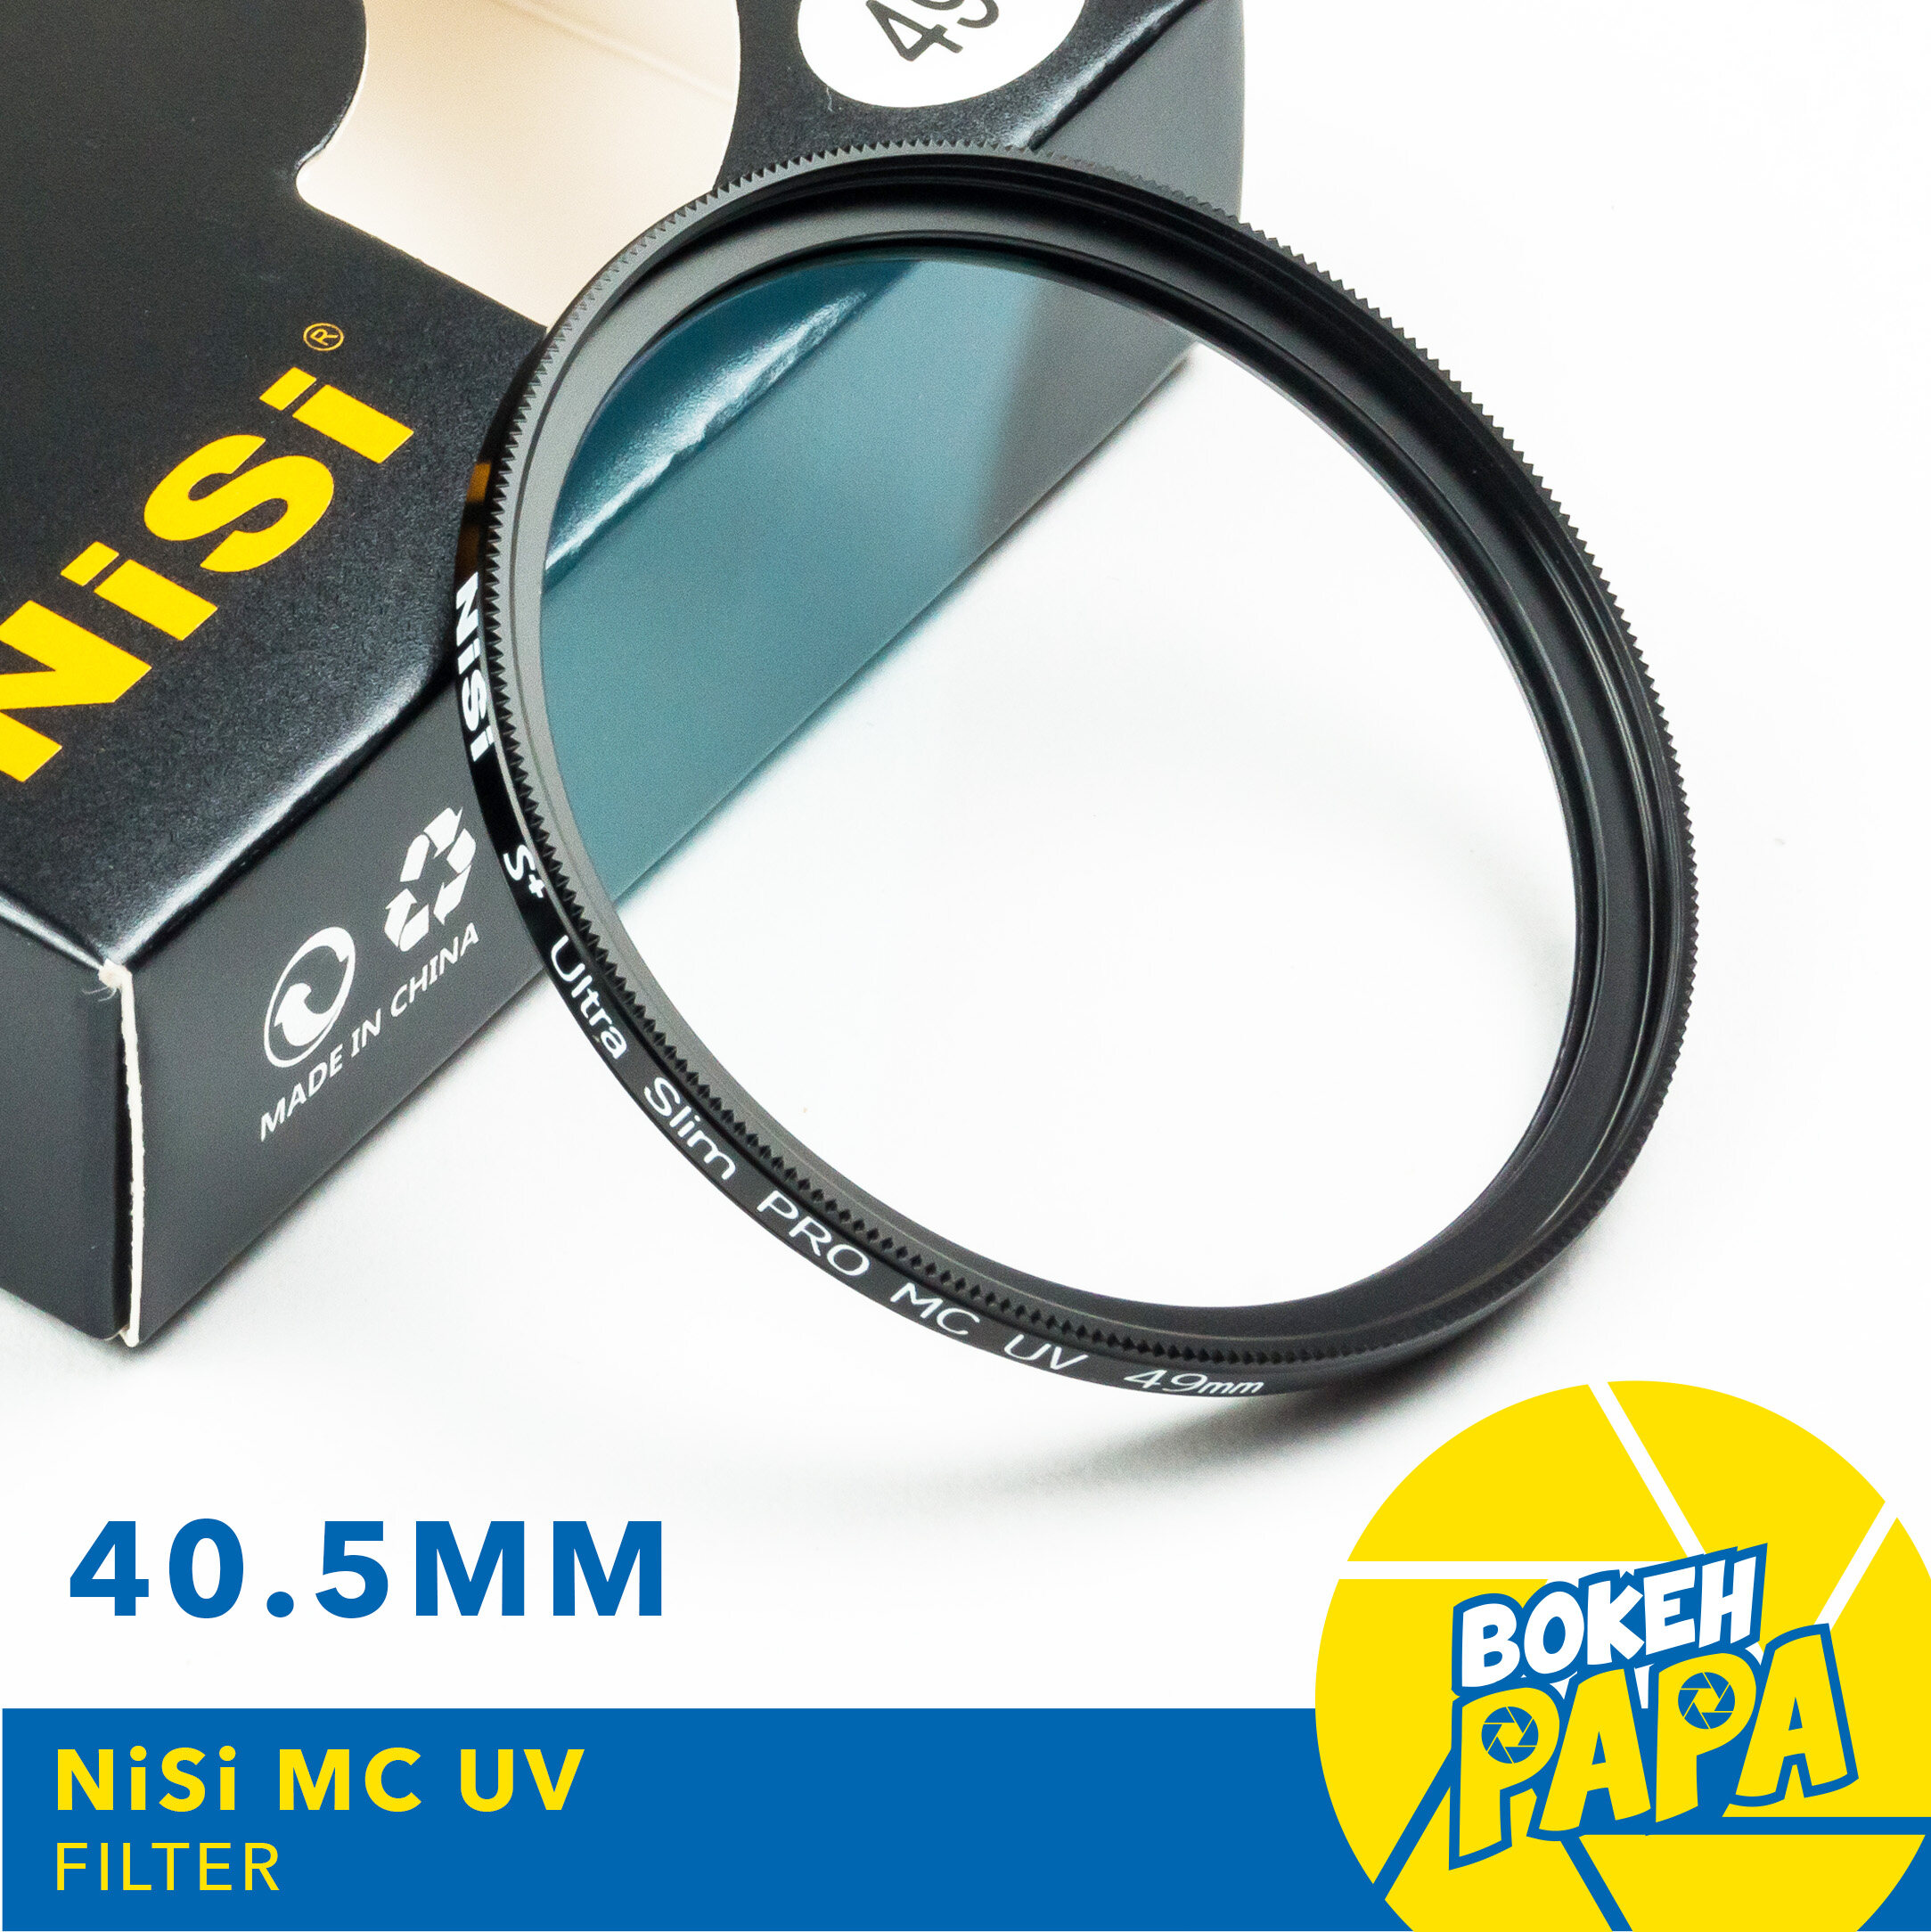 NISI 40.5mm MC UV Filter ที่กรองรังสียูวีโซด์ขนาดบางเป็นพิเศษ Professional MC ตัวกรองยูวีด้านคู่ 12 การเคลือบหลายชั้นกรอง ( NISI MC UV Filter 40.5mm )( ฟิลเตอร์ 40.5 มิลลิเมตร บางพิเศษ )